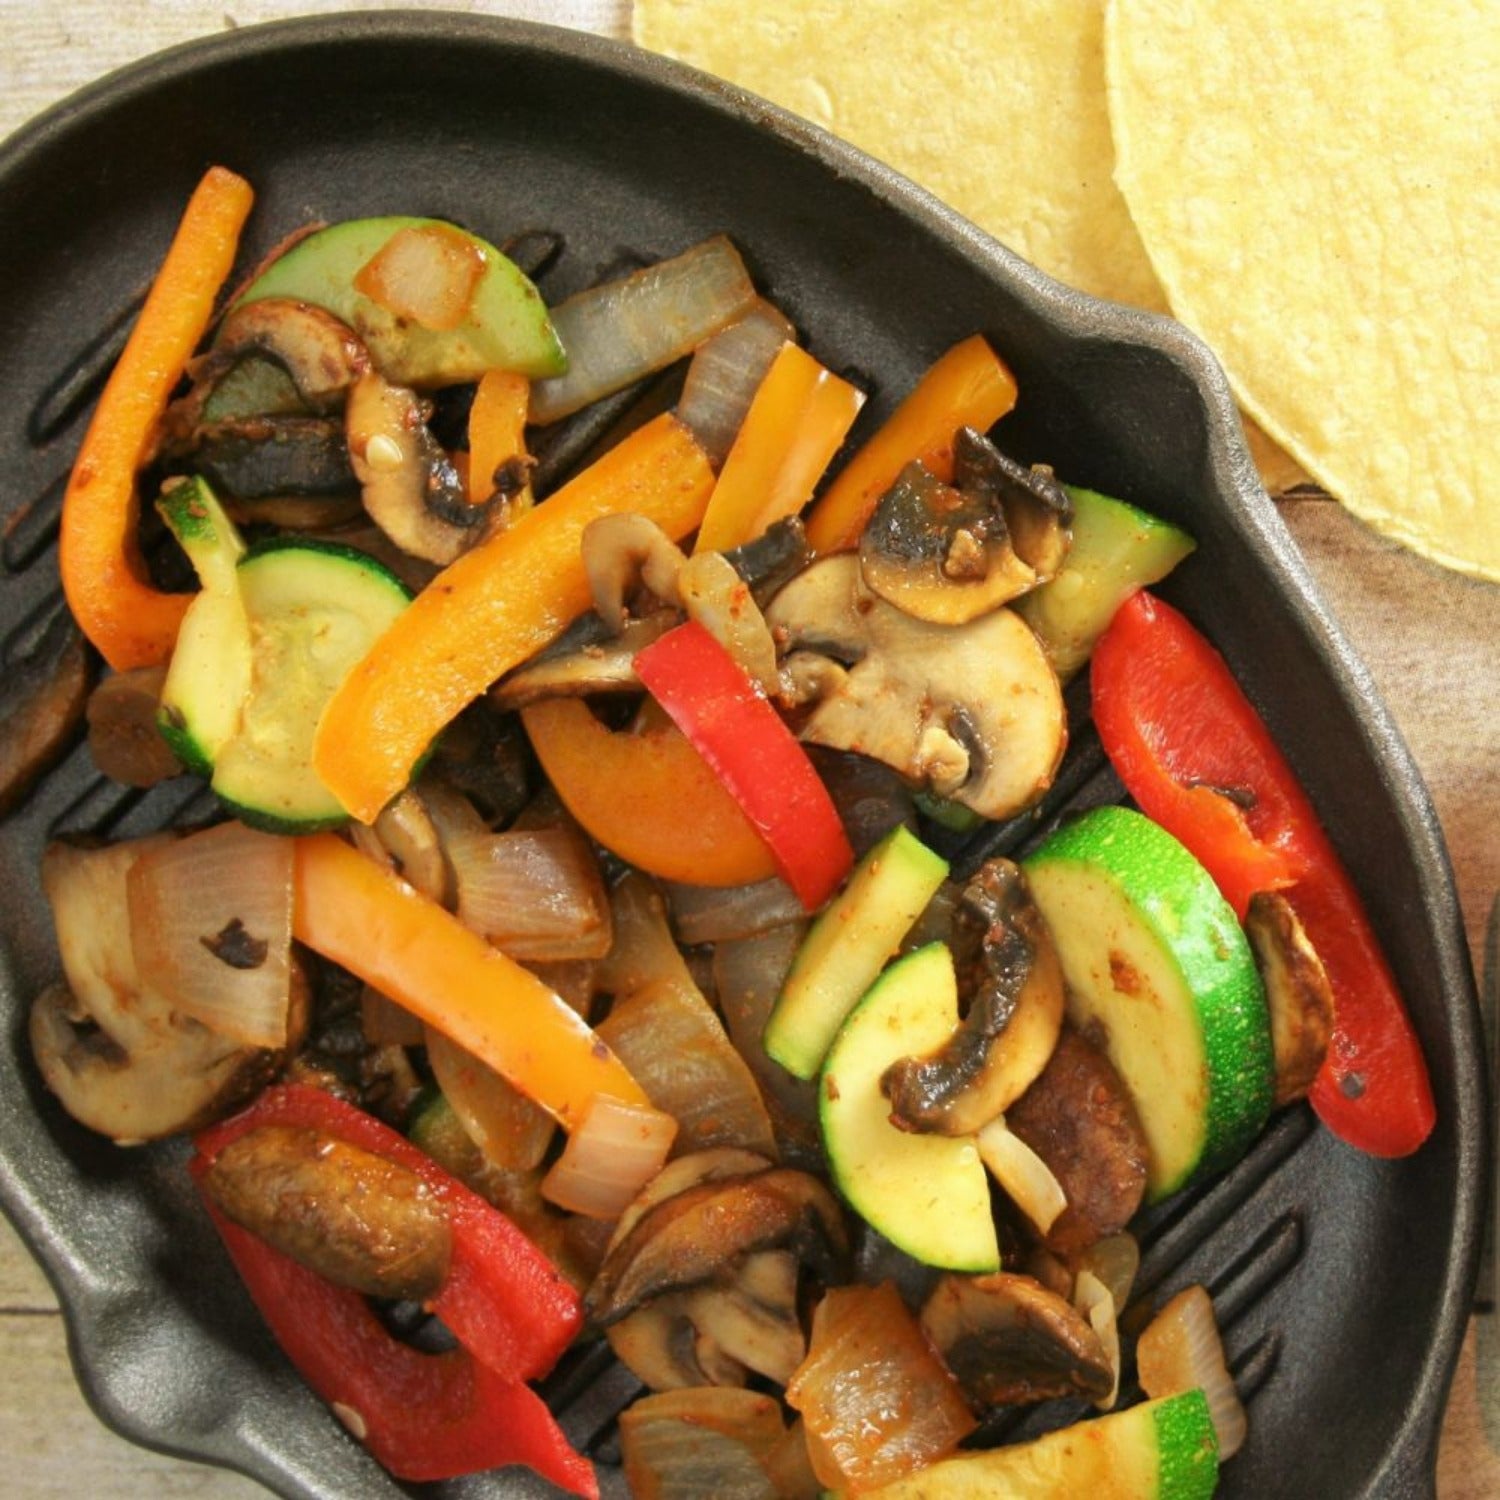 Seasoned fjita veggies in a skillet with tortillas